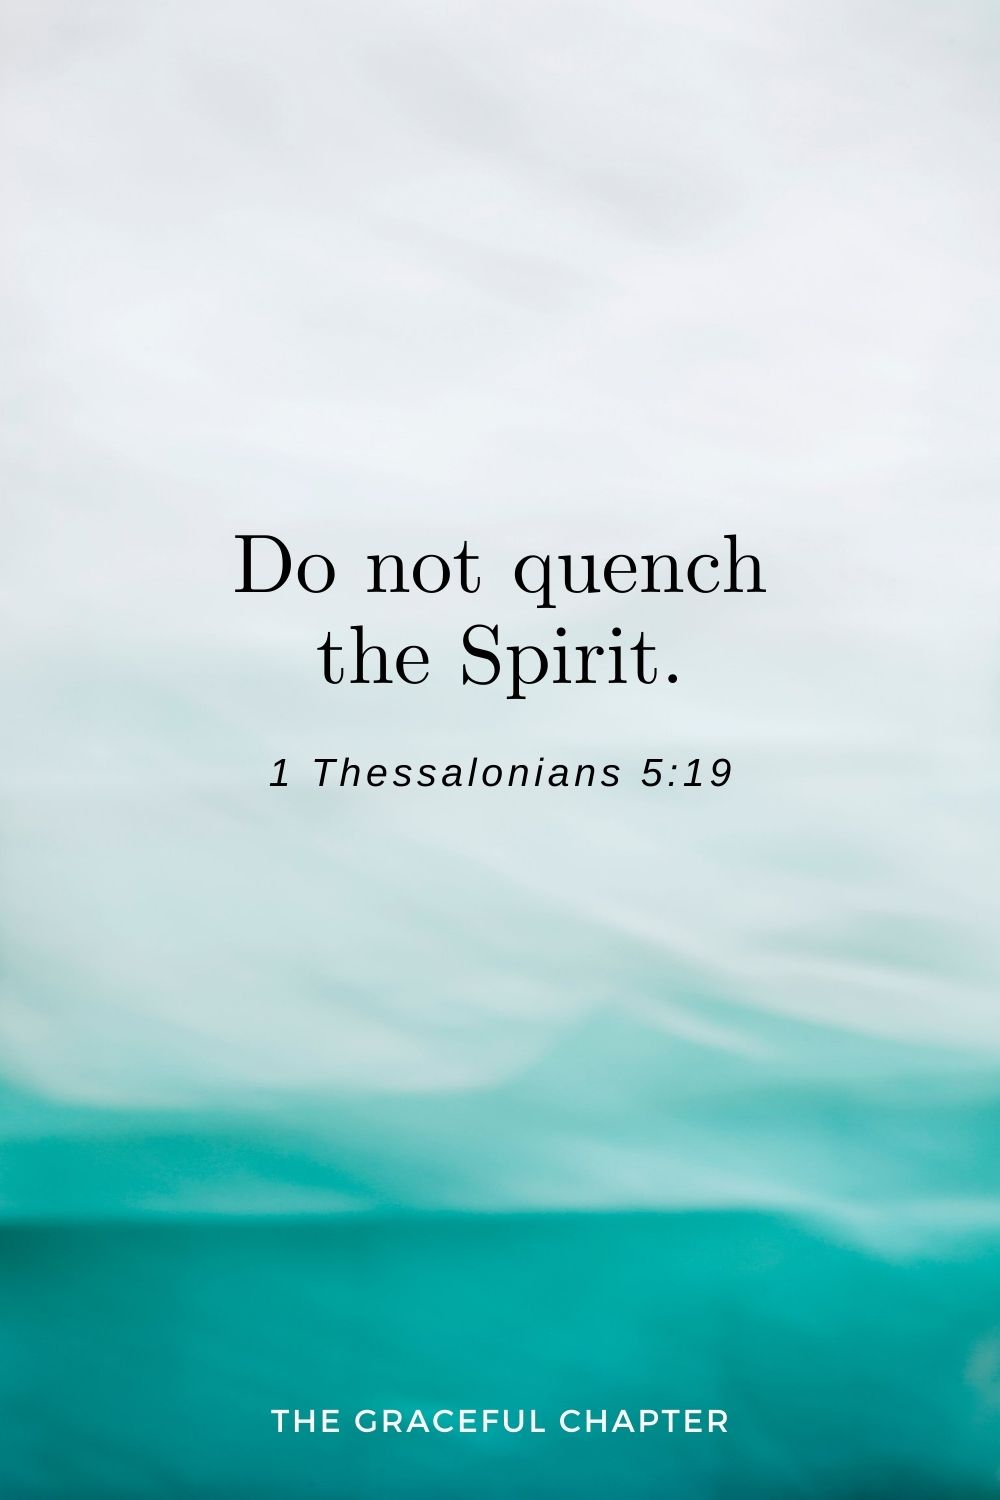 short bible verses about faith - Do not quench the Spirit. 1 Thessalonians 5:19